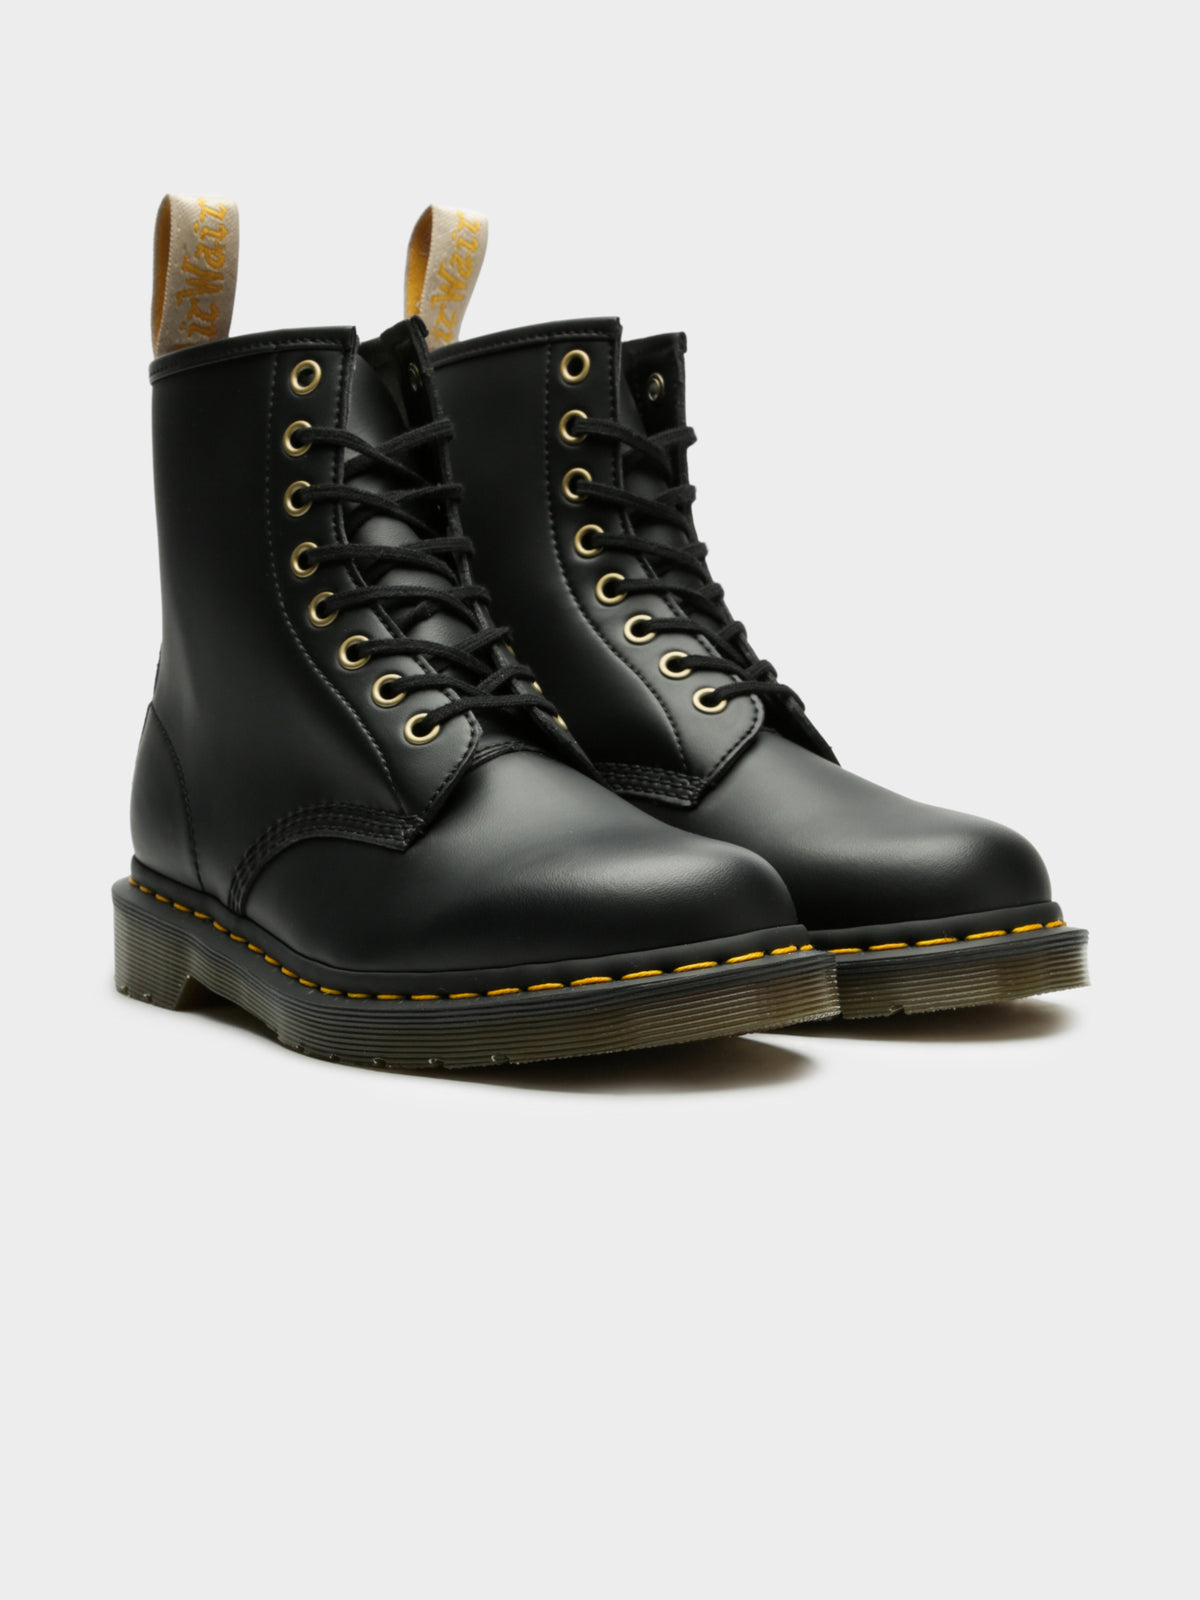 Unisex 1460 Vegan Boots in Black Noir